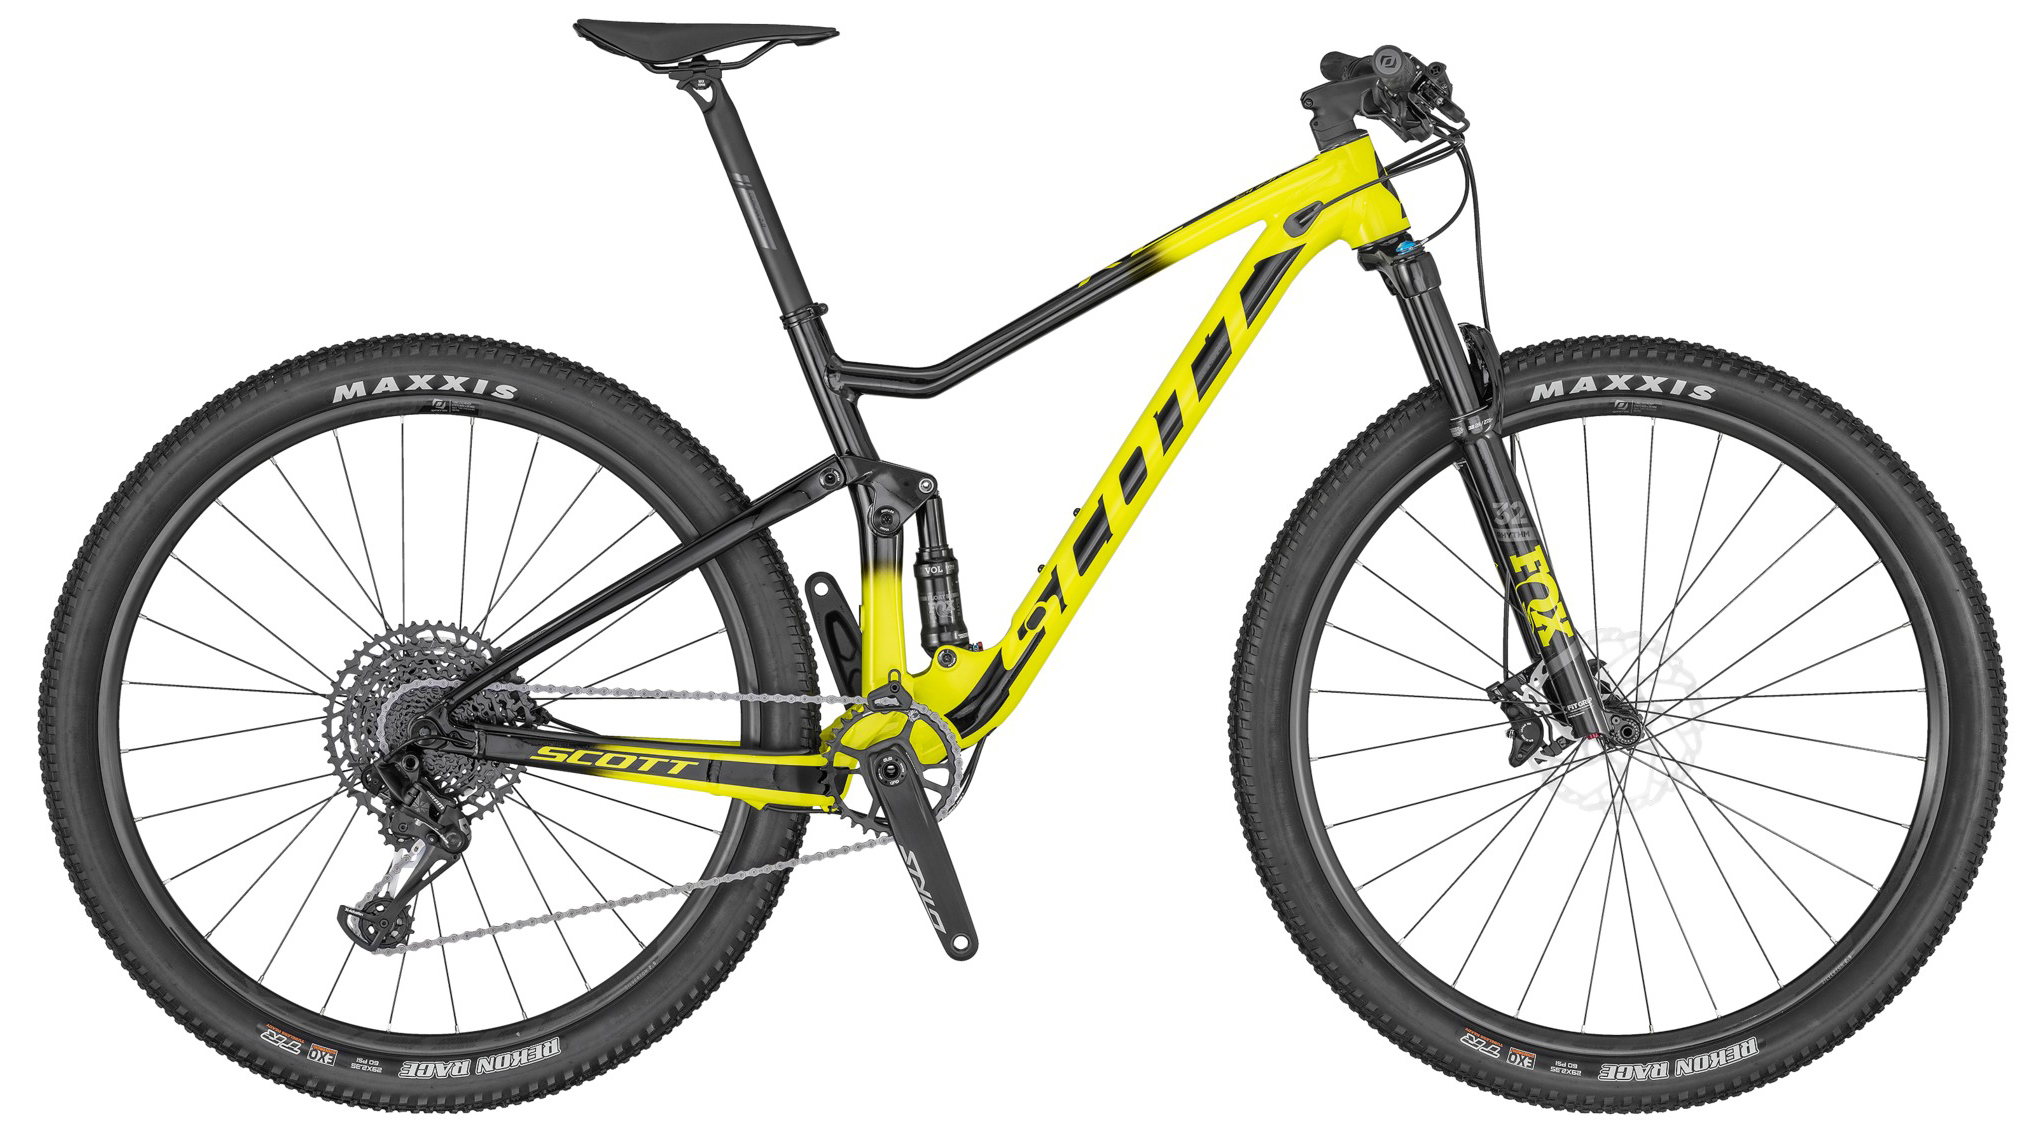  Велосипед Scott Spark RC 900 Comp 2020